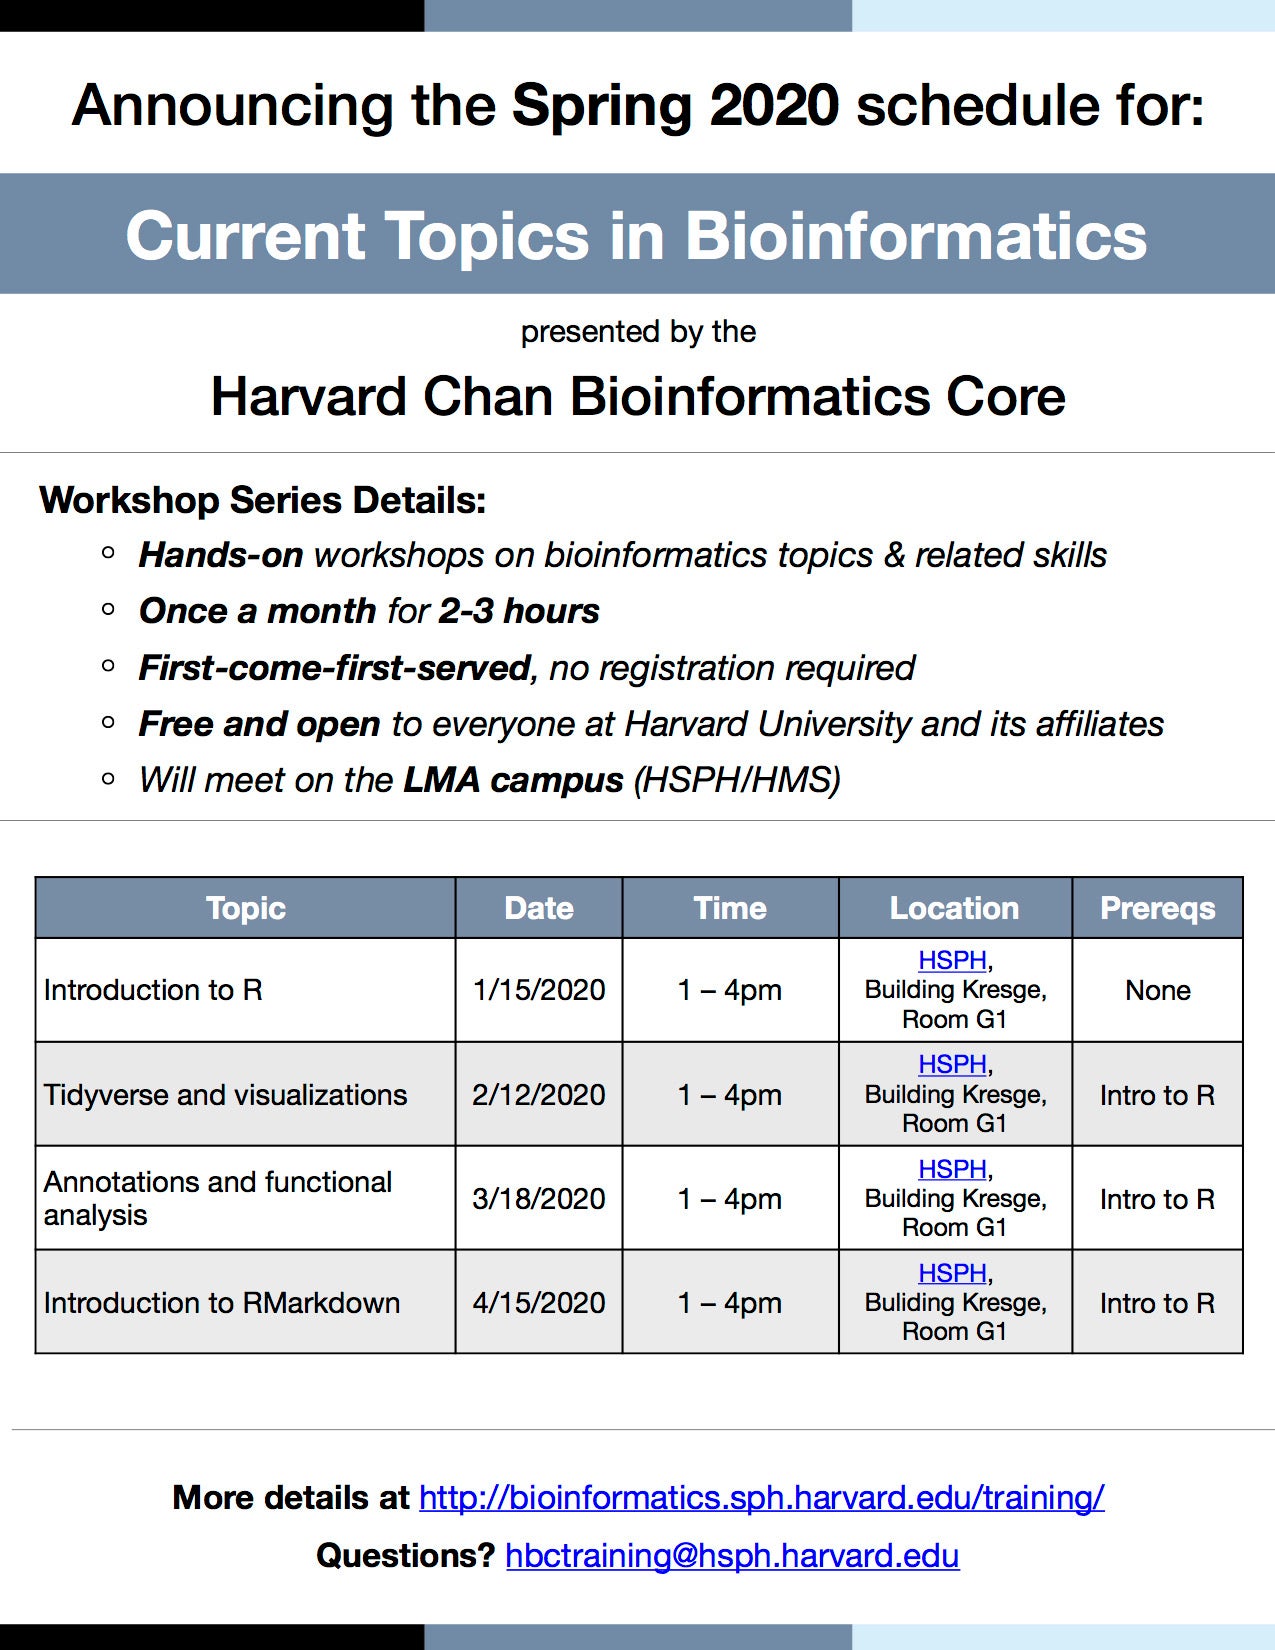 Harvard Chan Bioinformatics Core Training Schedule